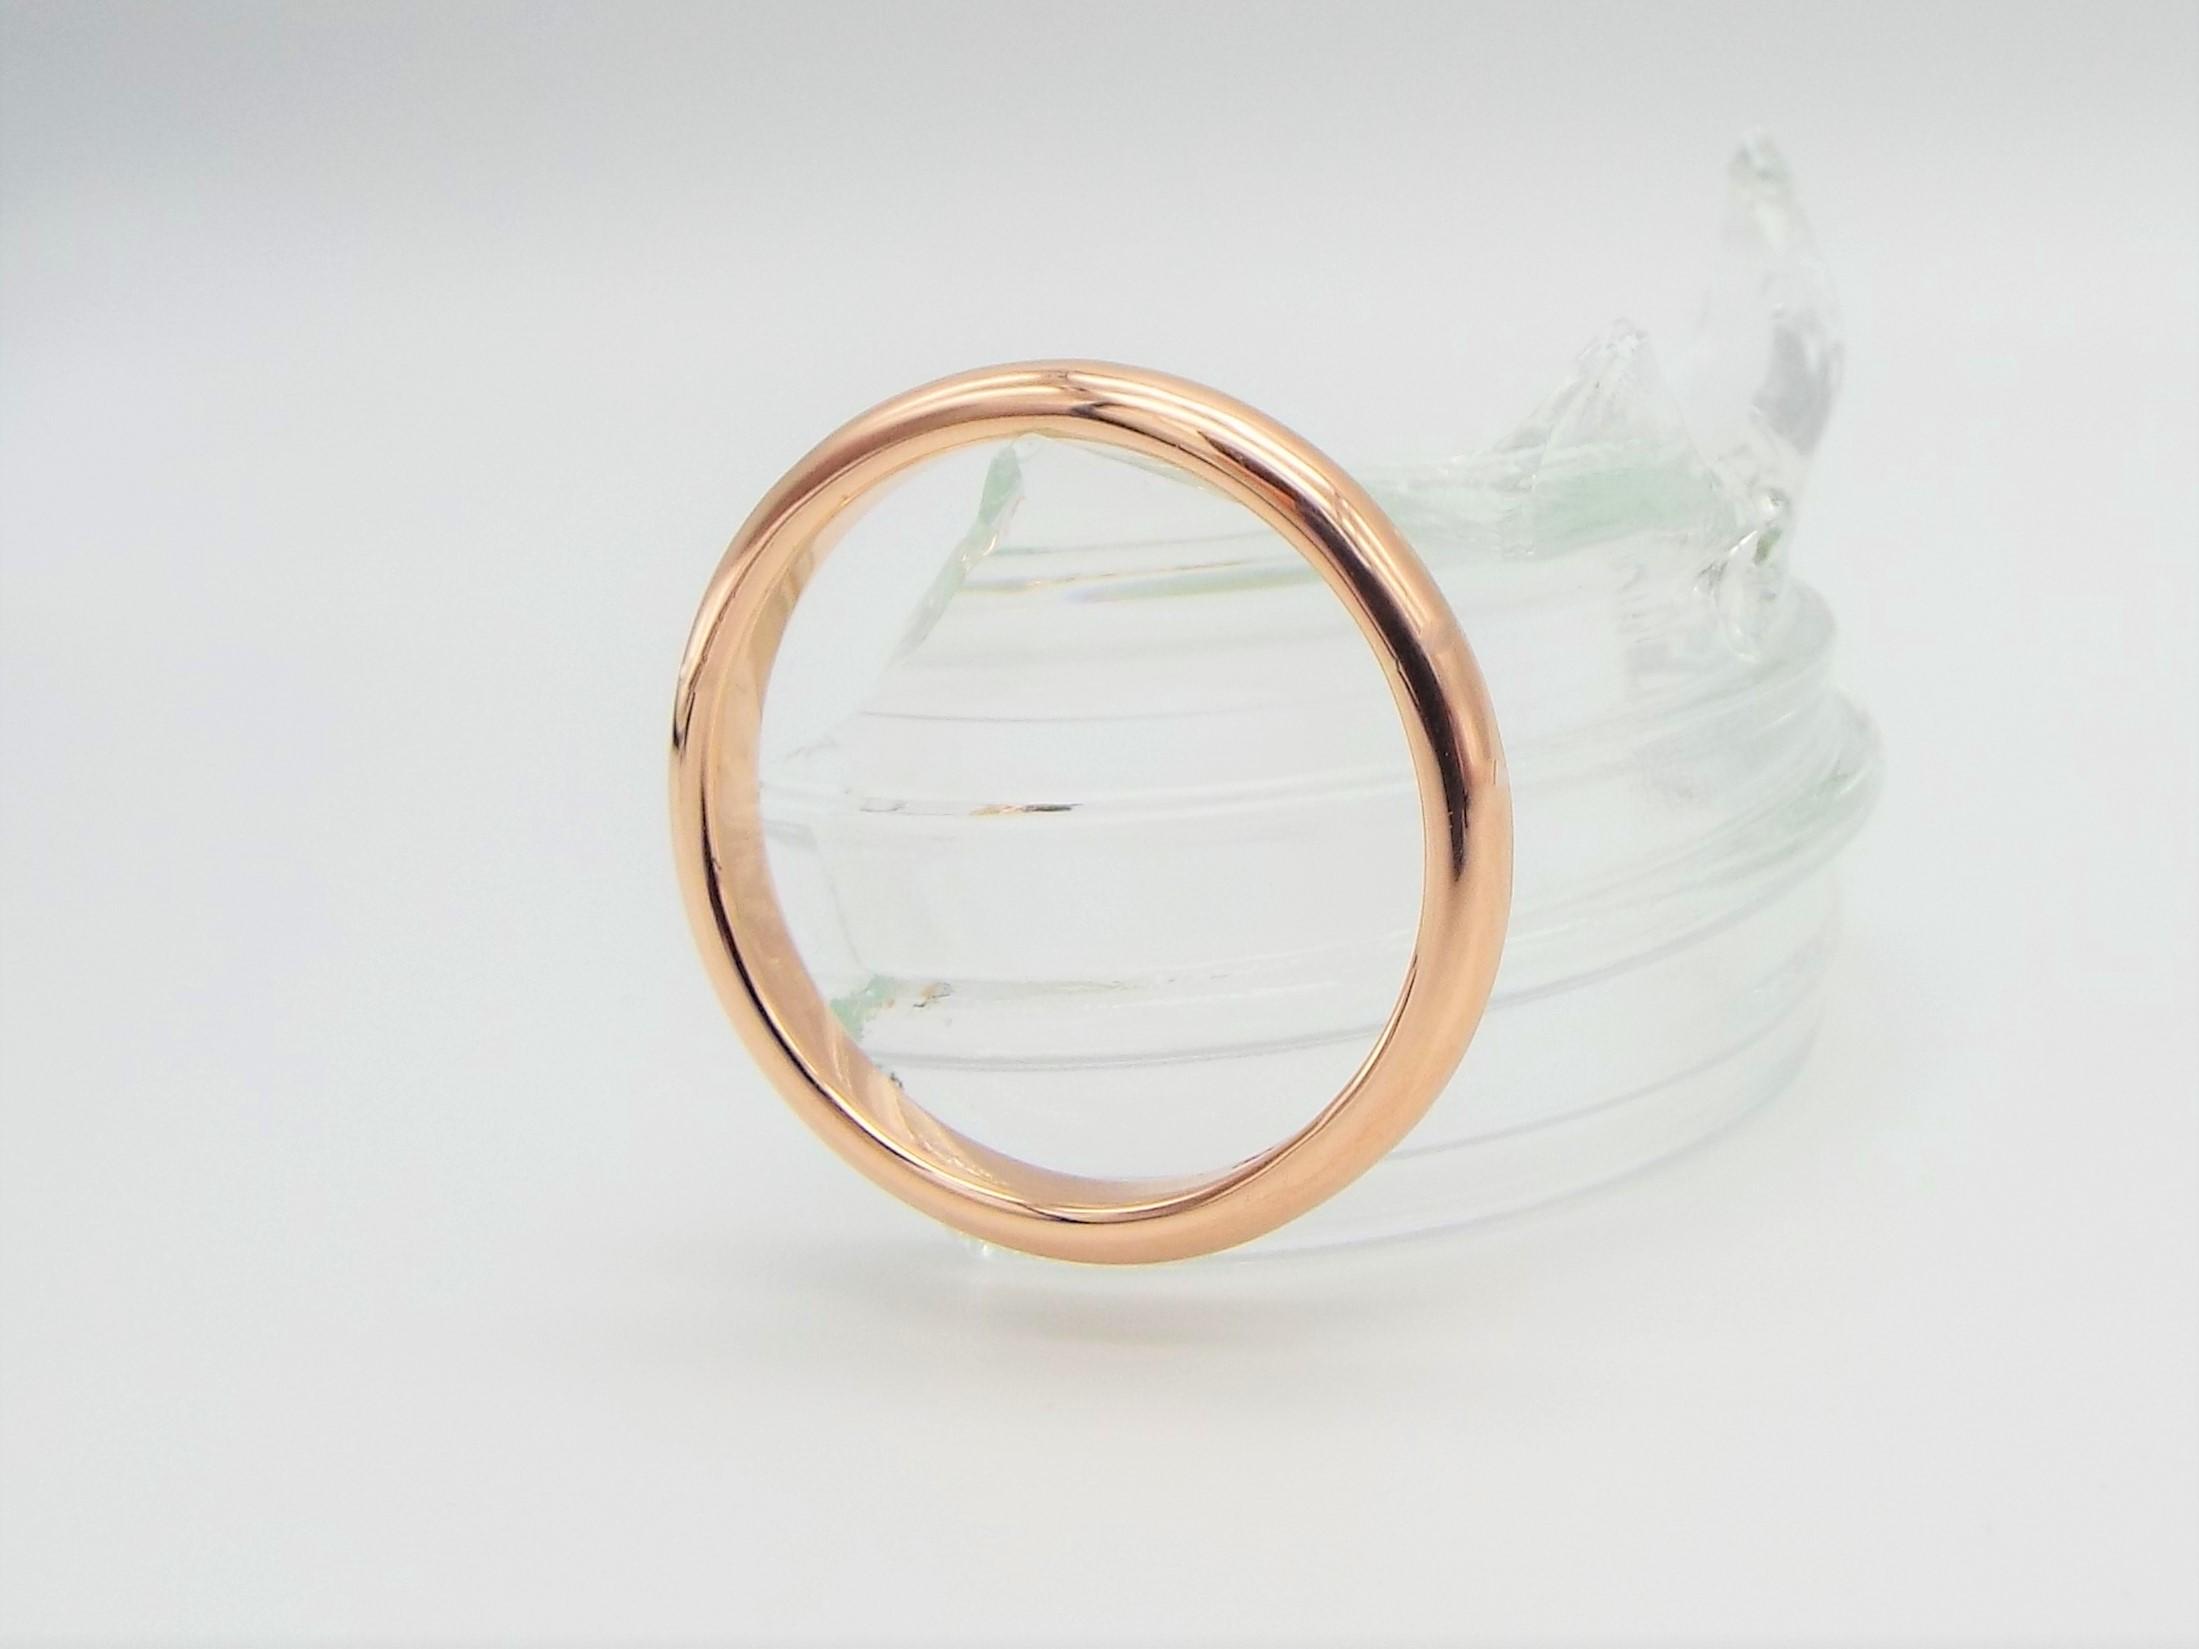 3mm wide rose gold wedding ring